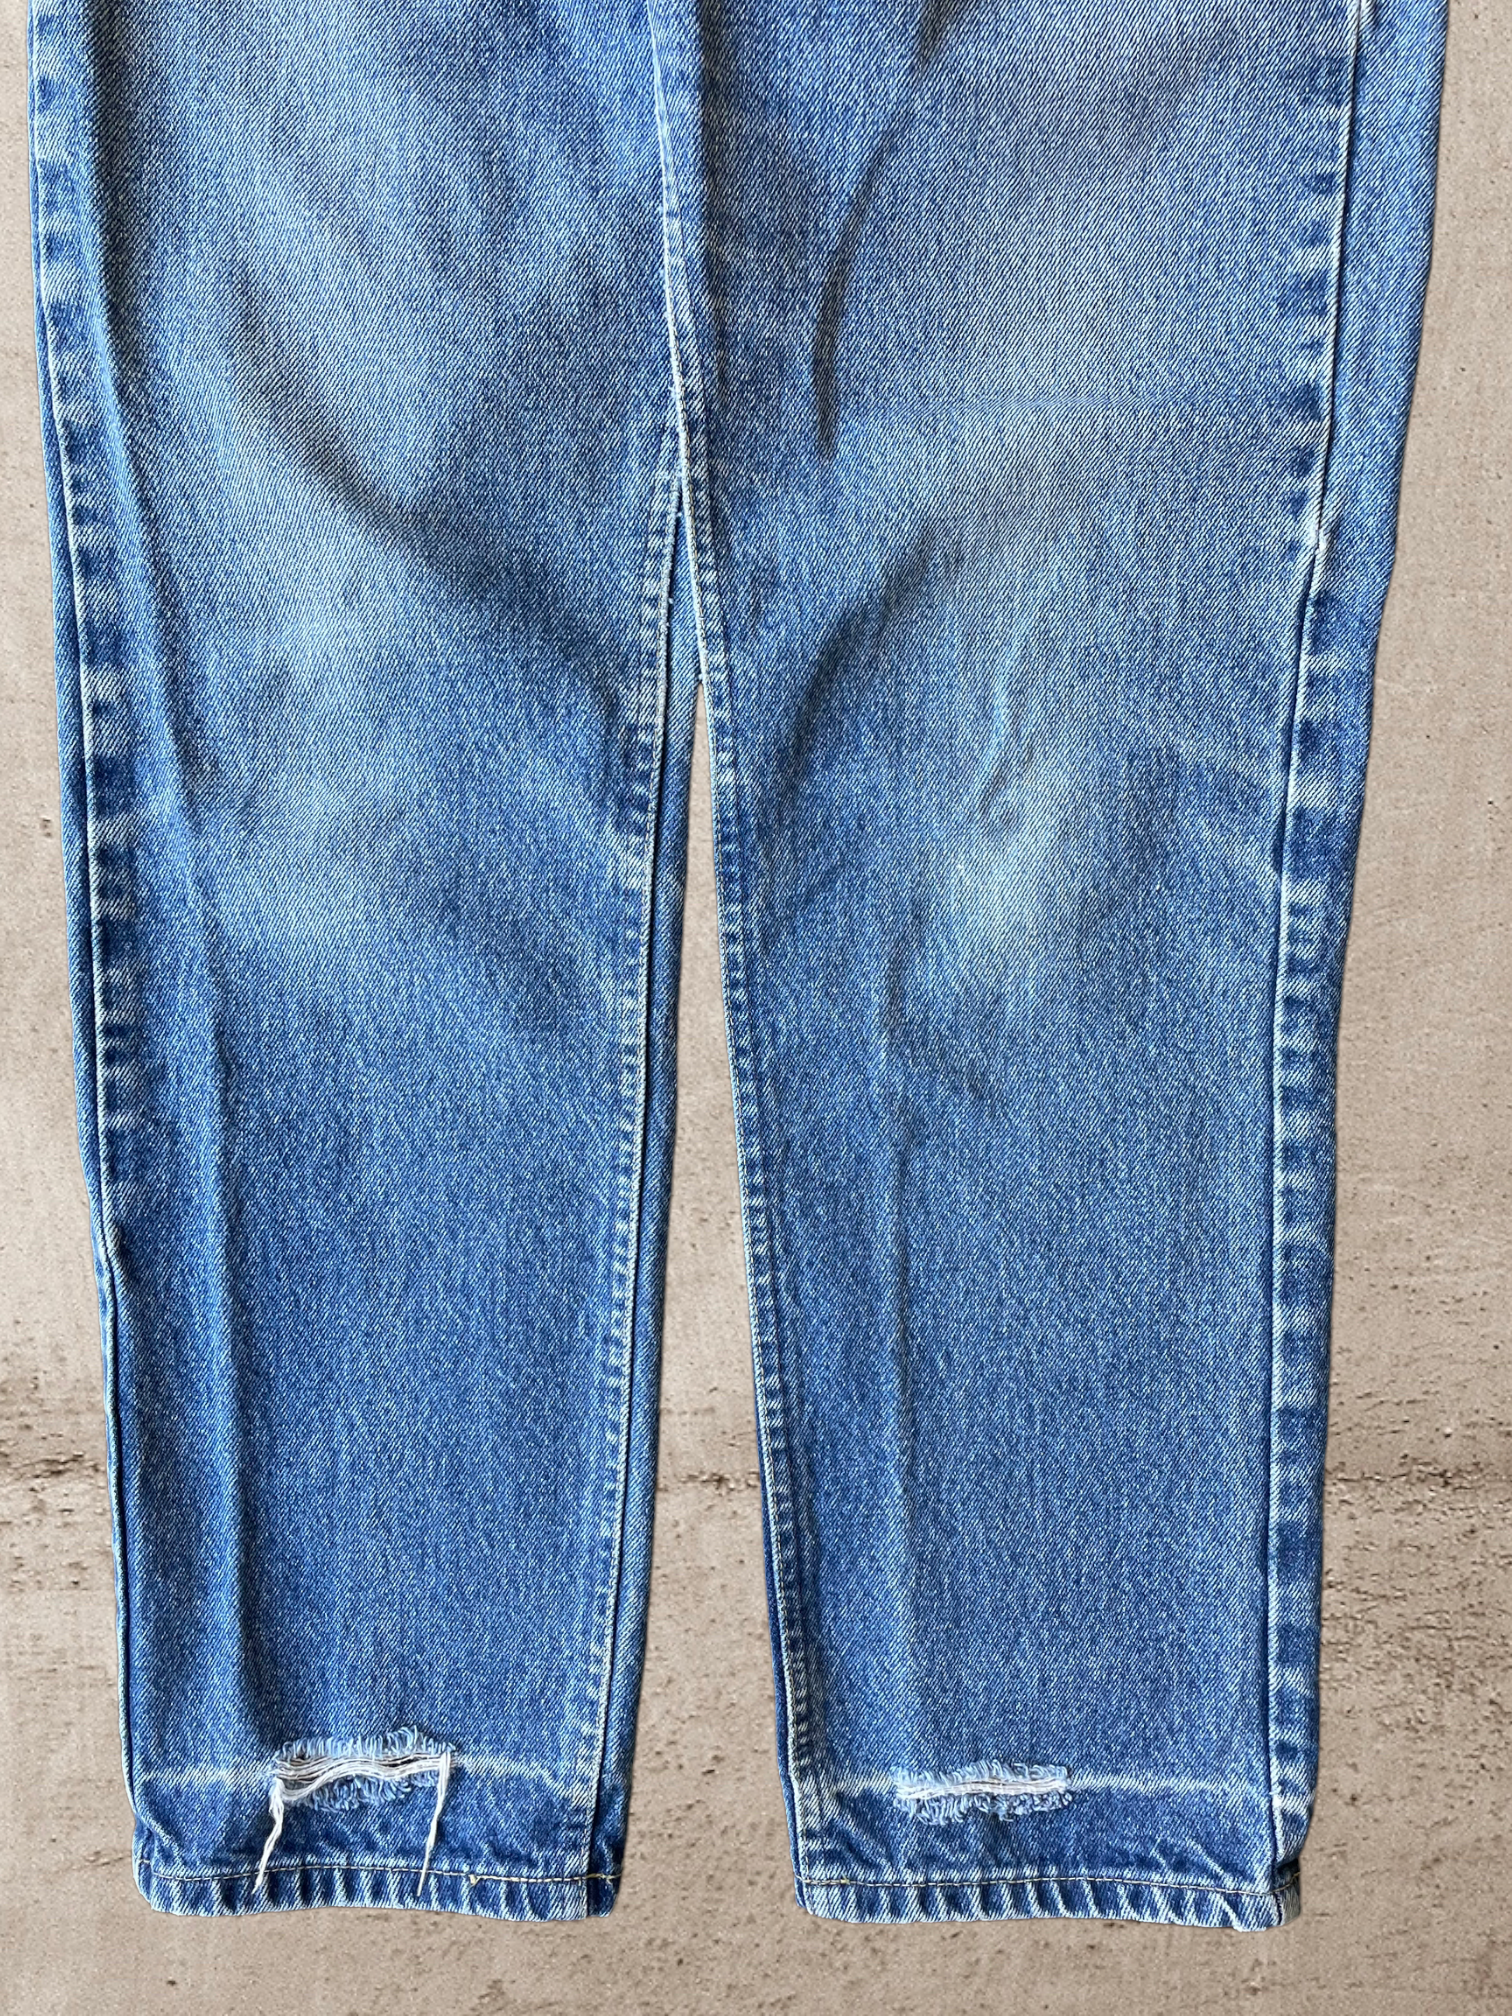 90s Lee Straight Leg Jeans - 27x30